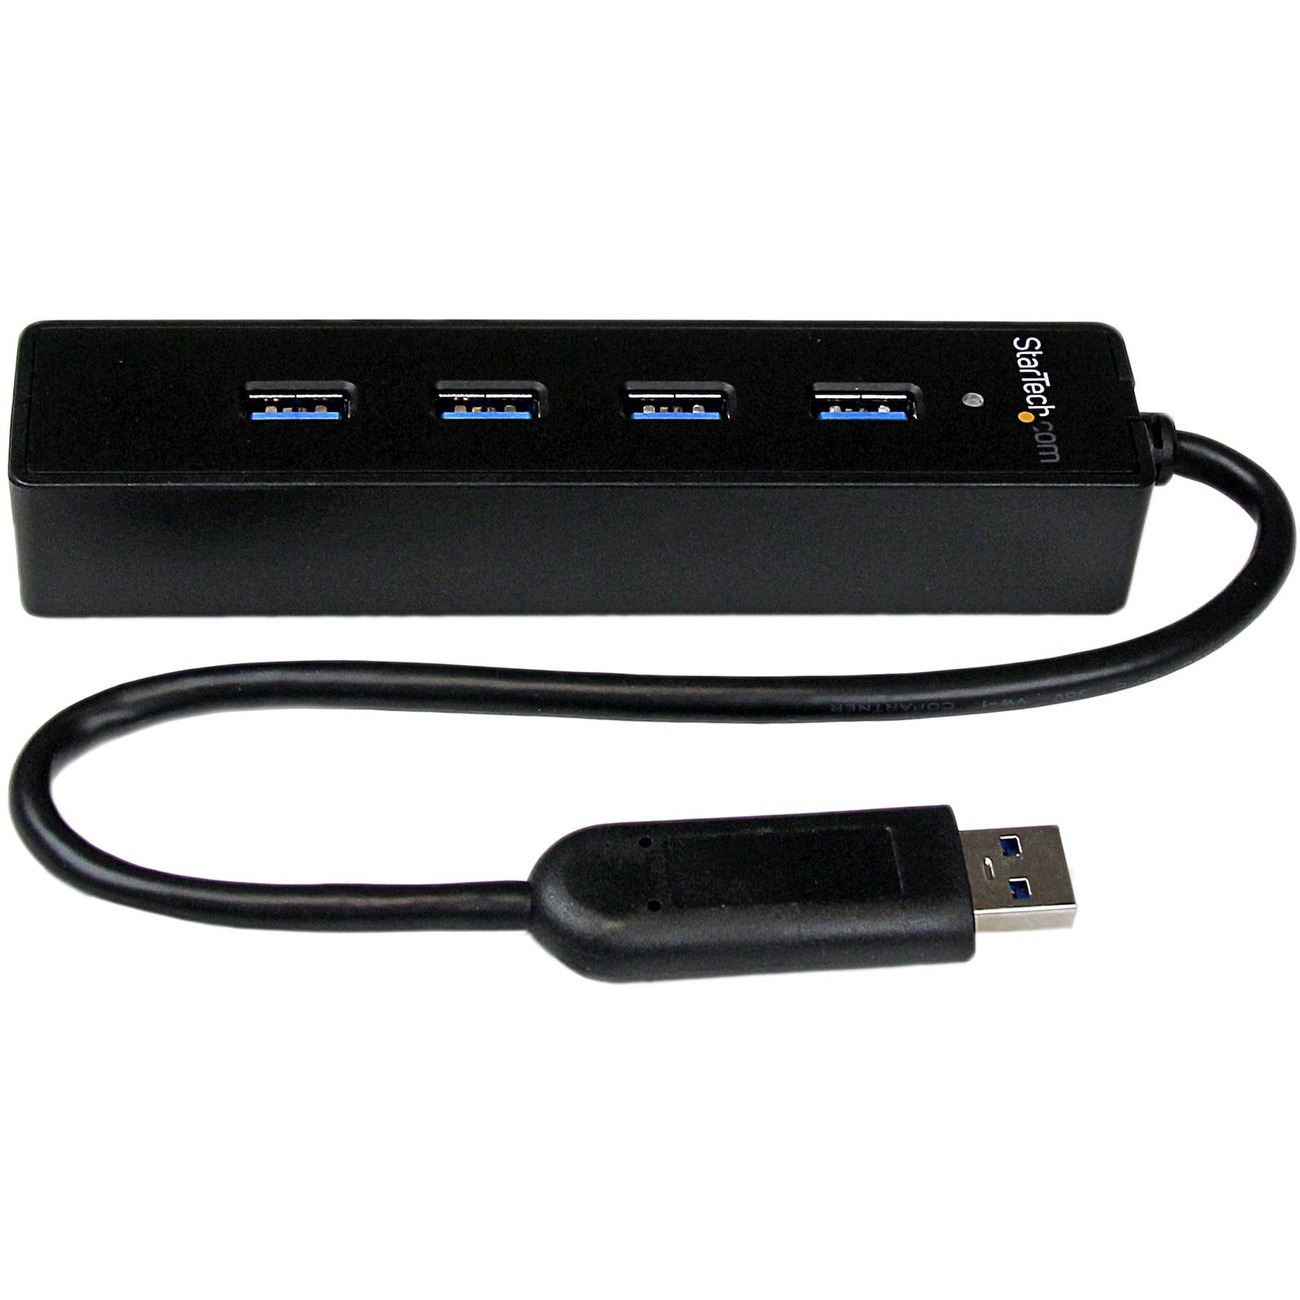 StarTech.com ST7300U3M 7-port USB 3.0 Hub Desktop/Wall-mountable Metal  Chassis